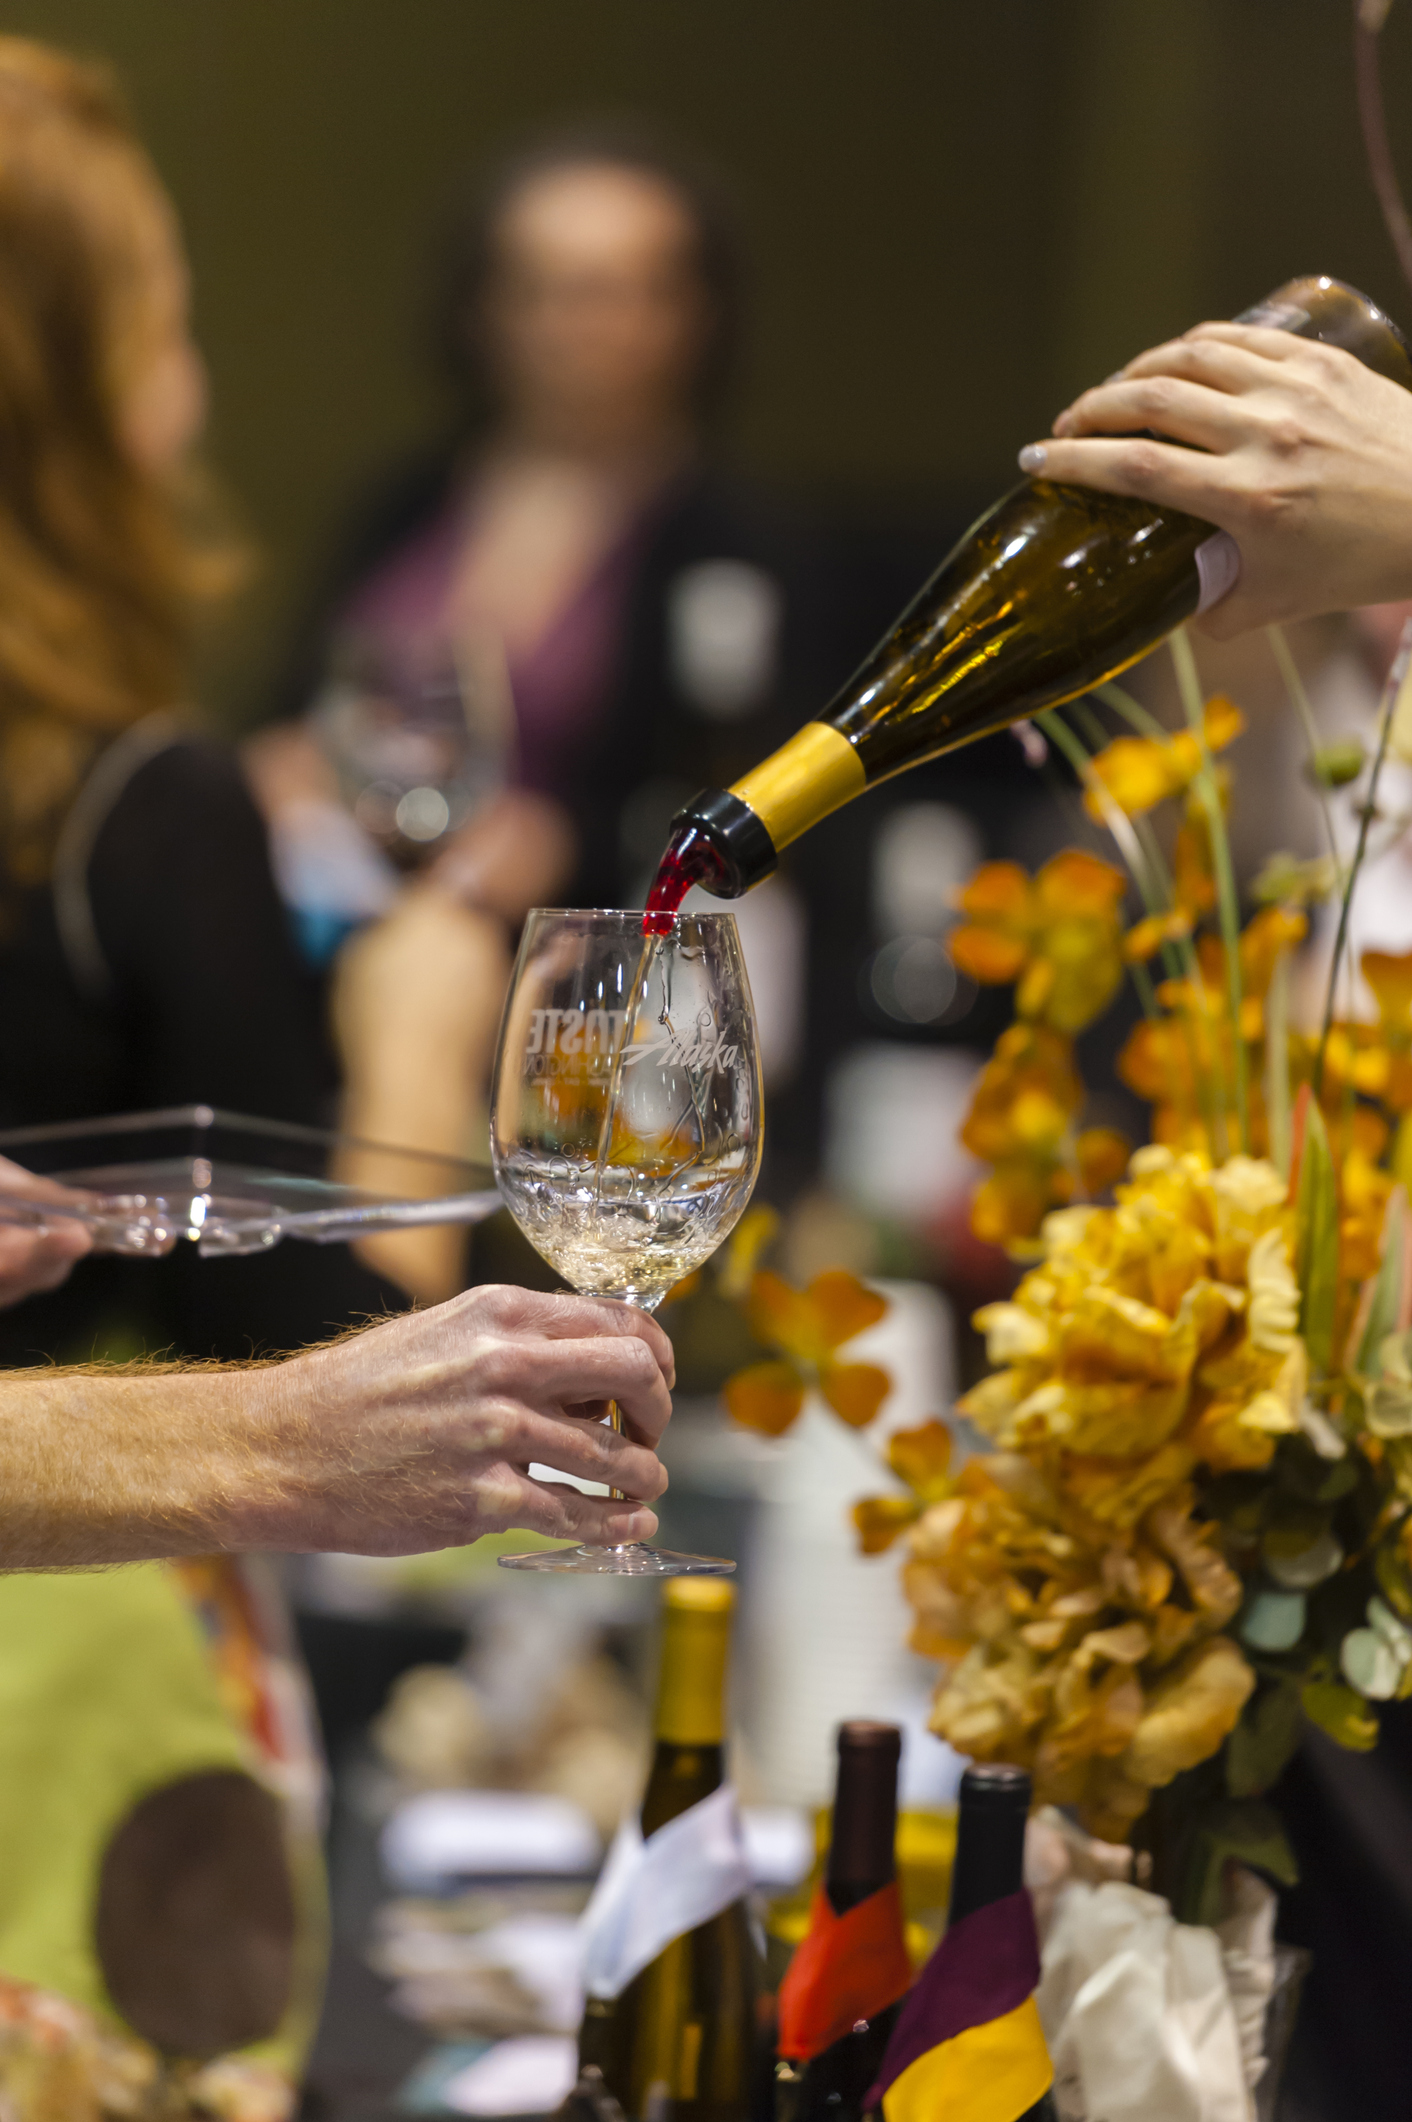 Person pouring wine during Taste of Washington seminars and Grand Tasting, Seattle, Washington State, USA